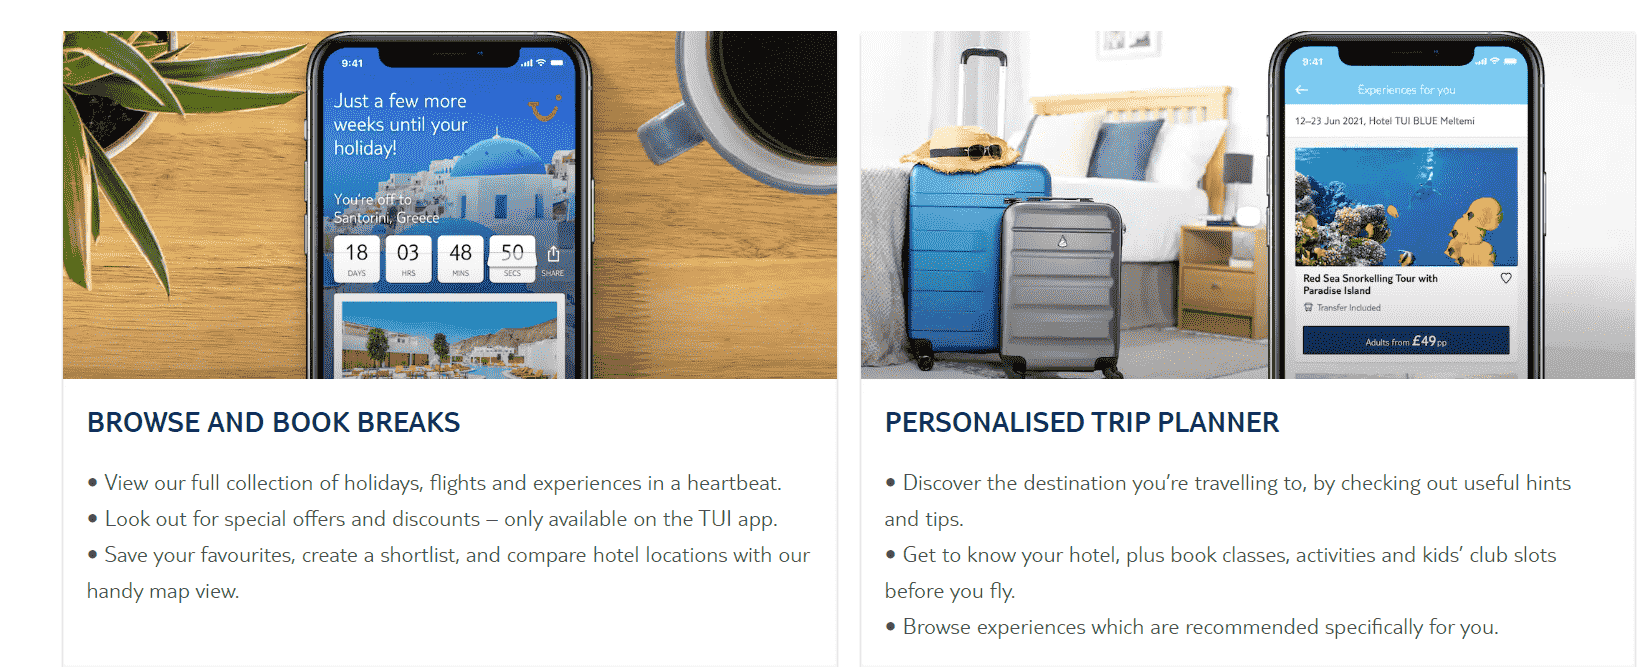 TUI travel app image